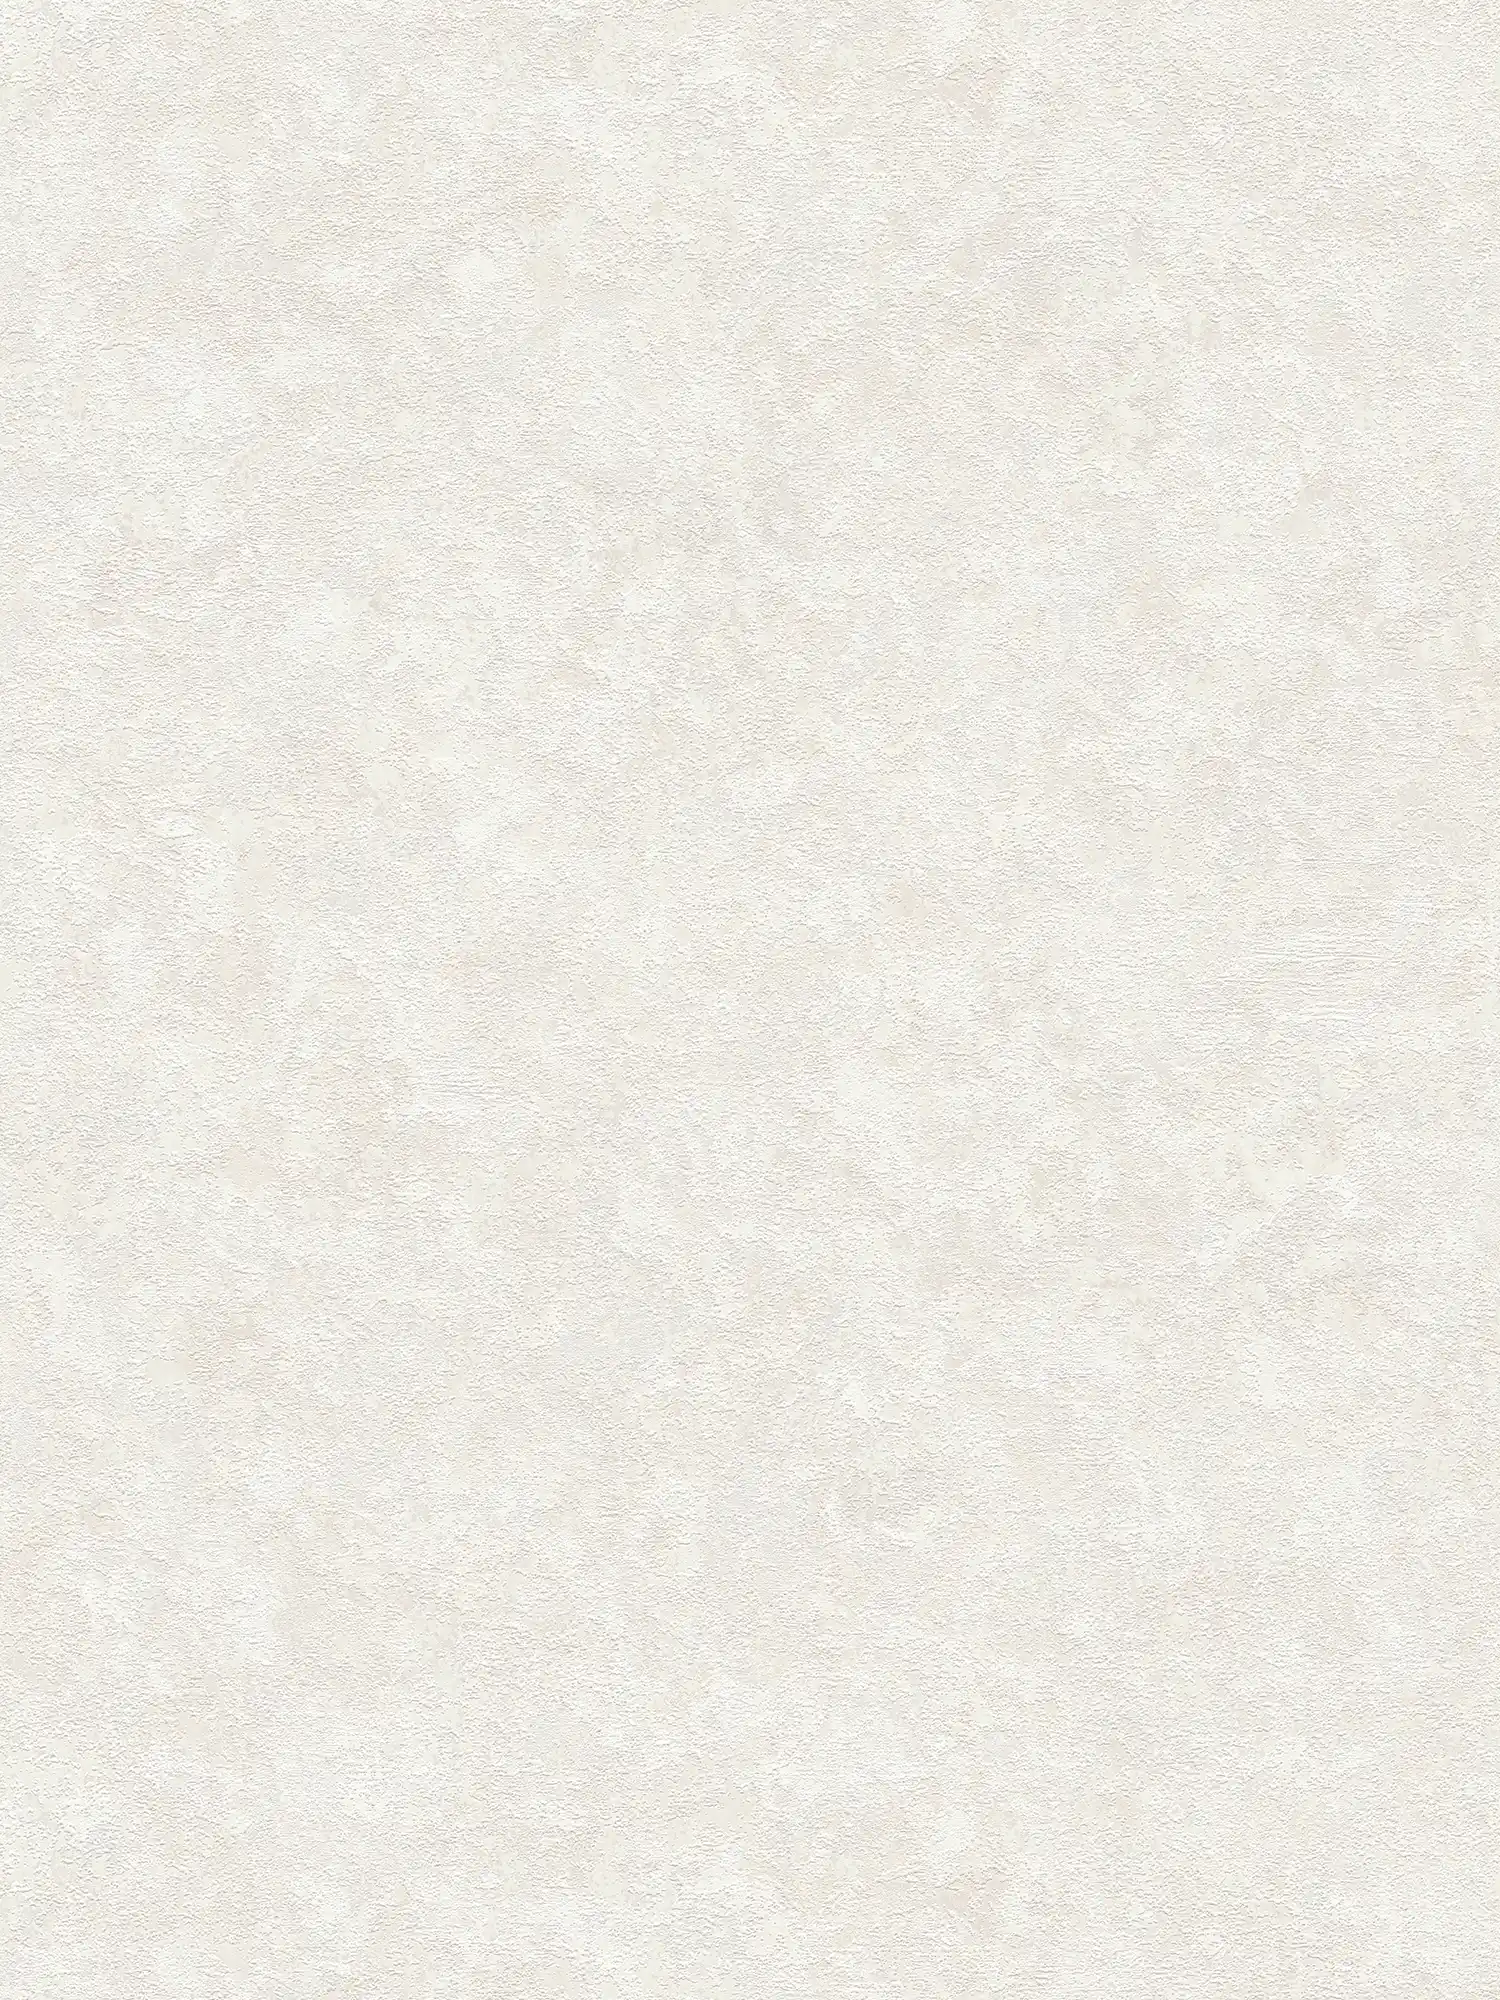 Bright non-woven wallpaper with textured pattern - cream, white
